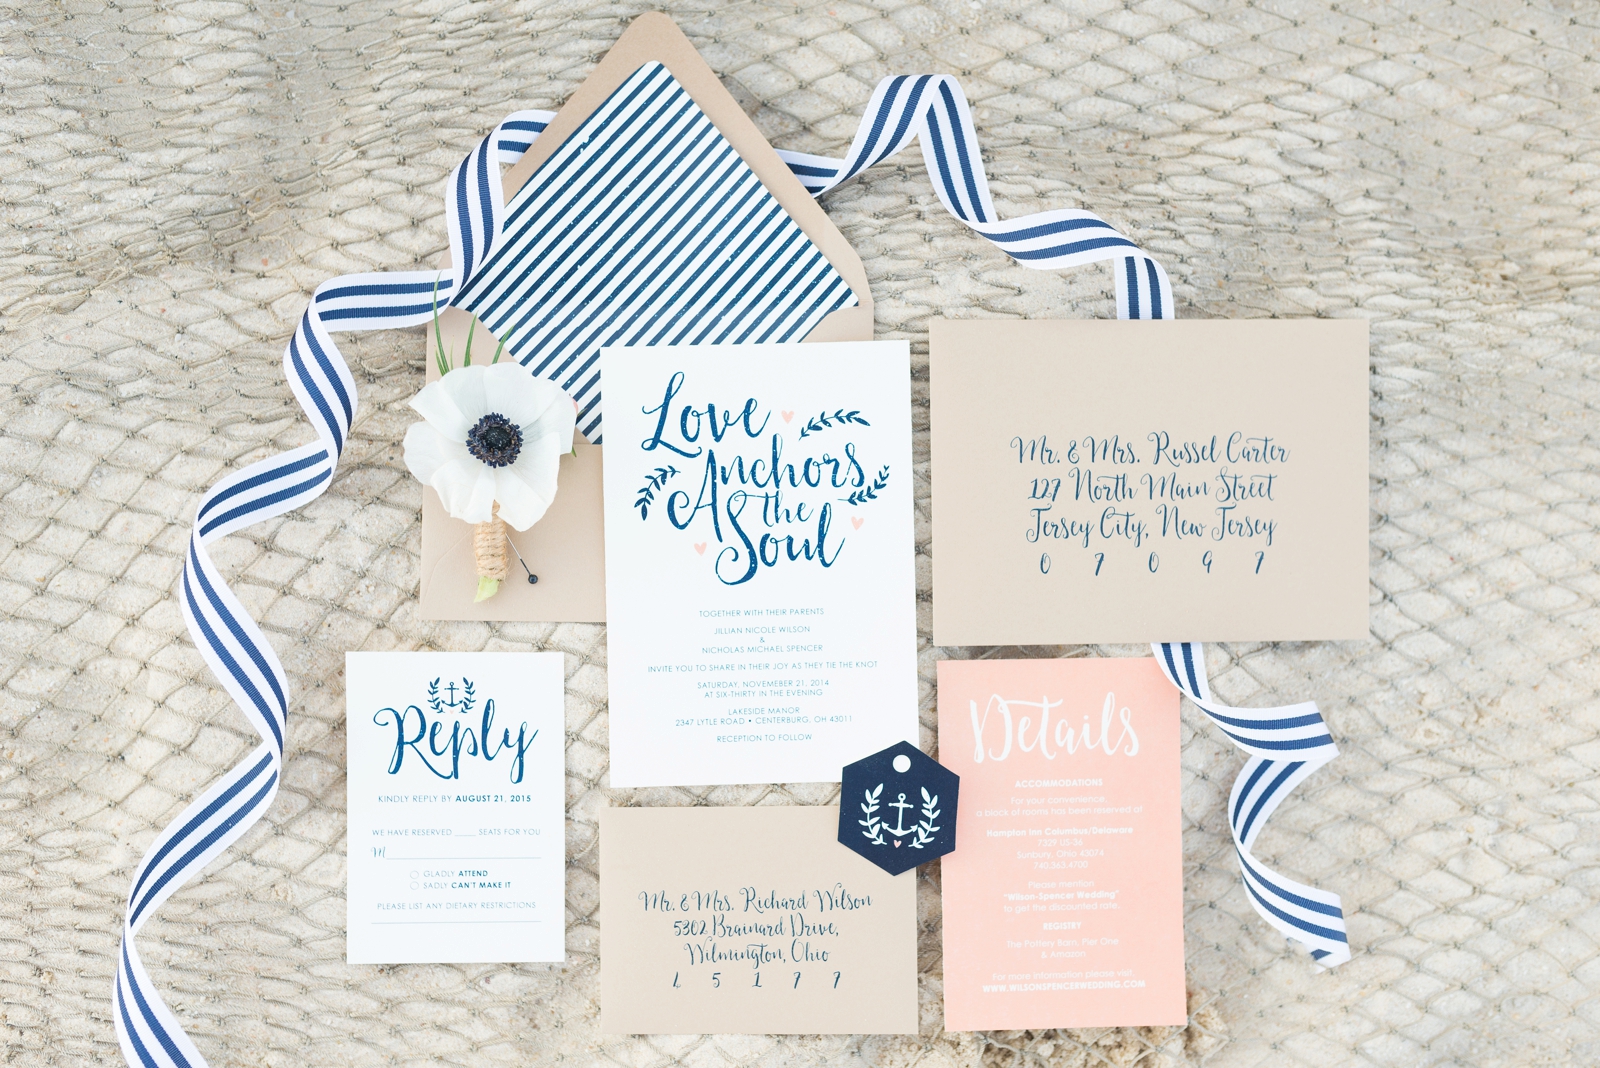 love-anchors-the-soul-wedding-invitation